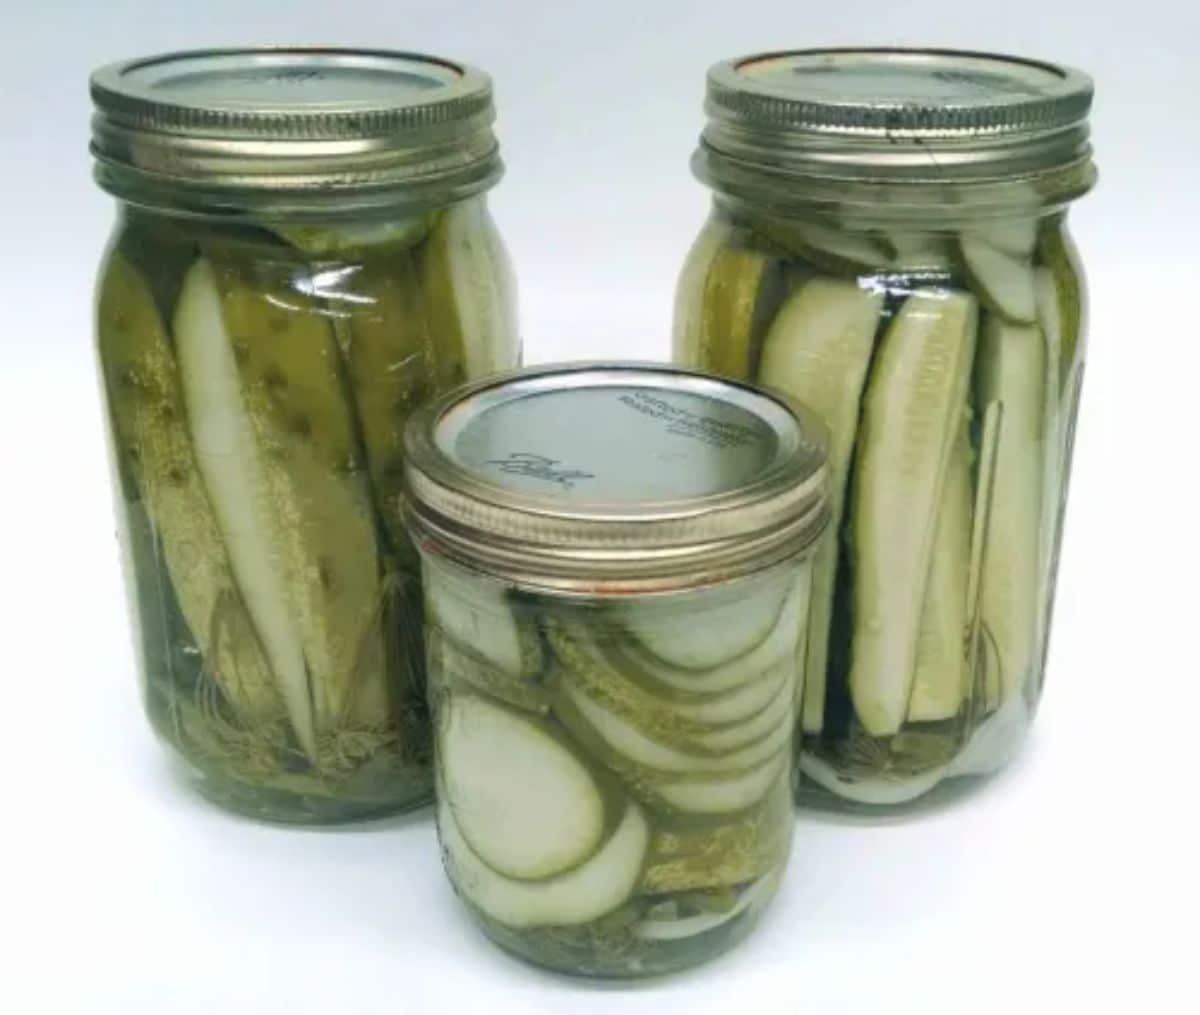 Garlic jalapeño dill pickles in glass jars.